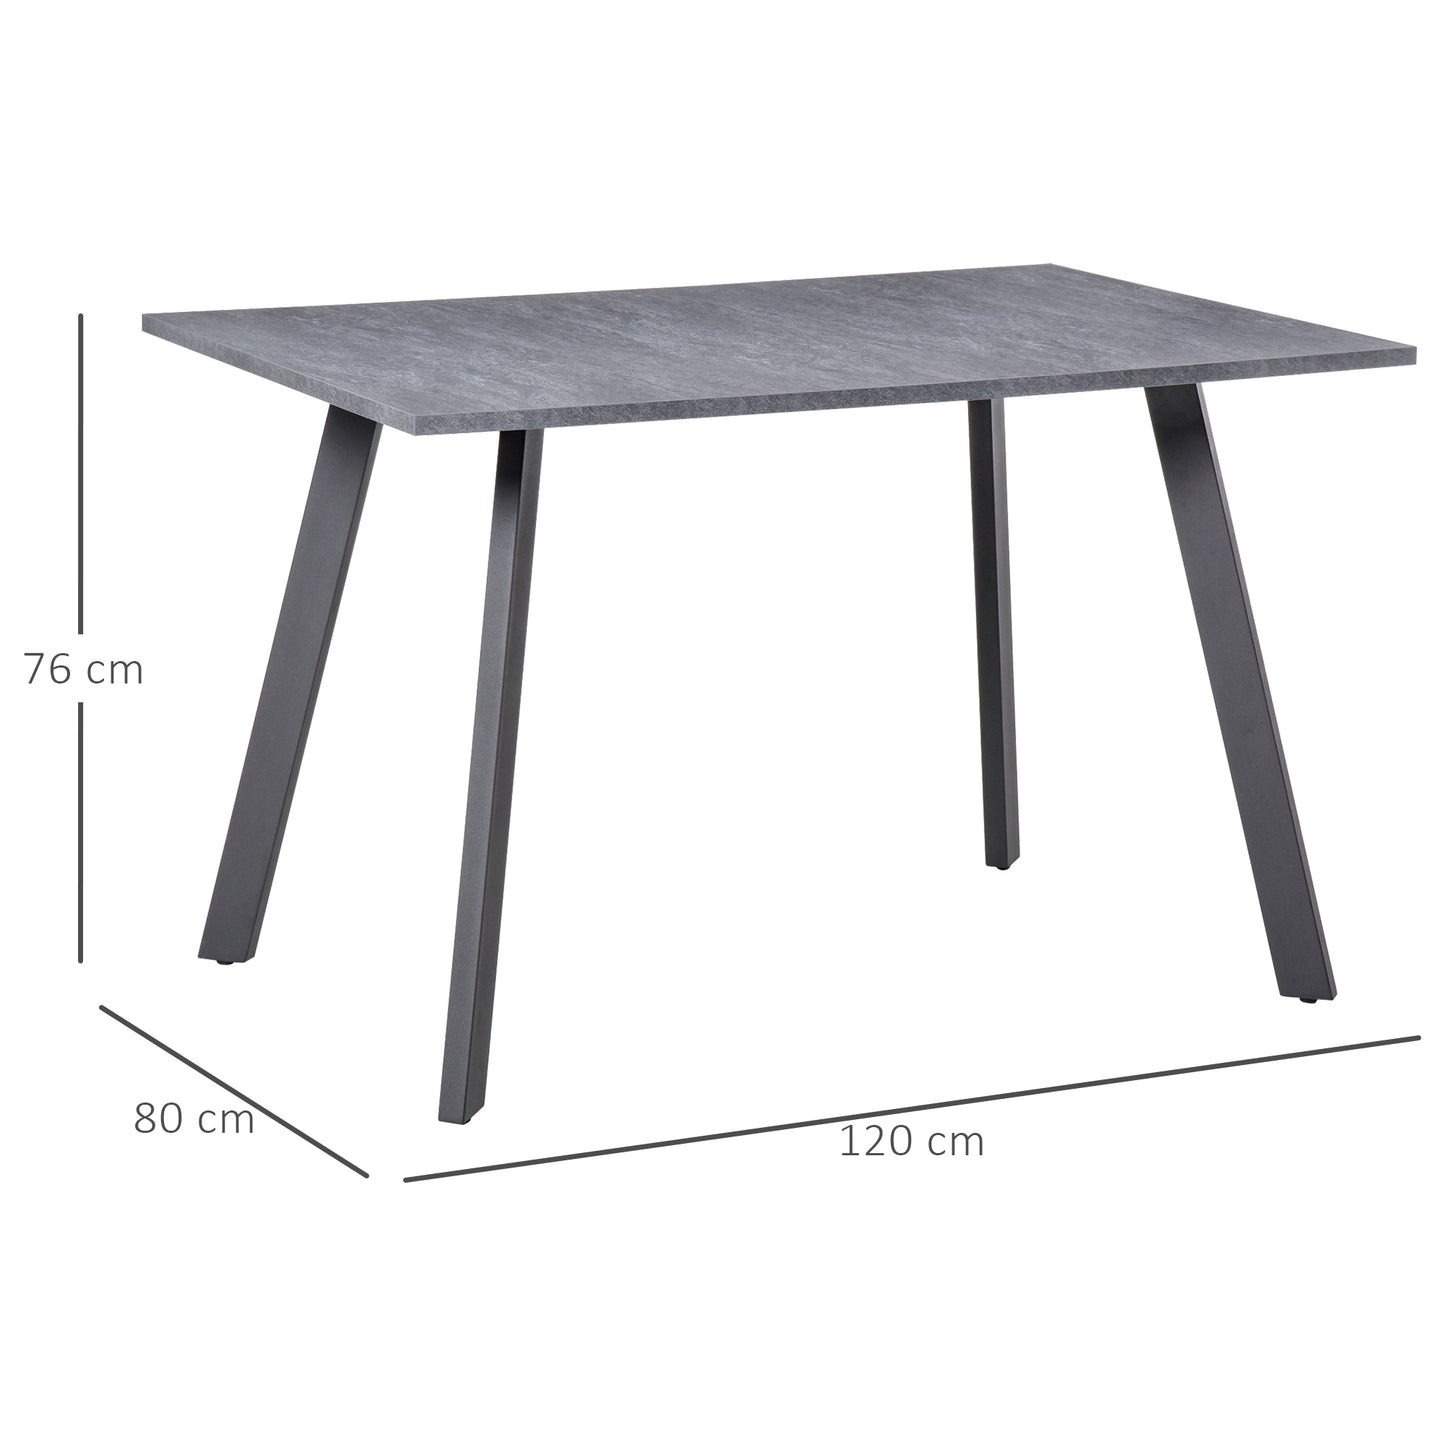 HOMCOM Modern Rectangular Dining Table Indoor w/ Metal Legs Spacious Tabletop Dark Grey